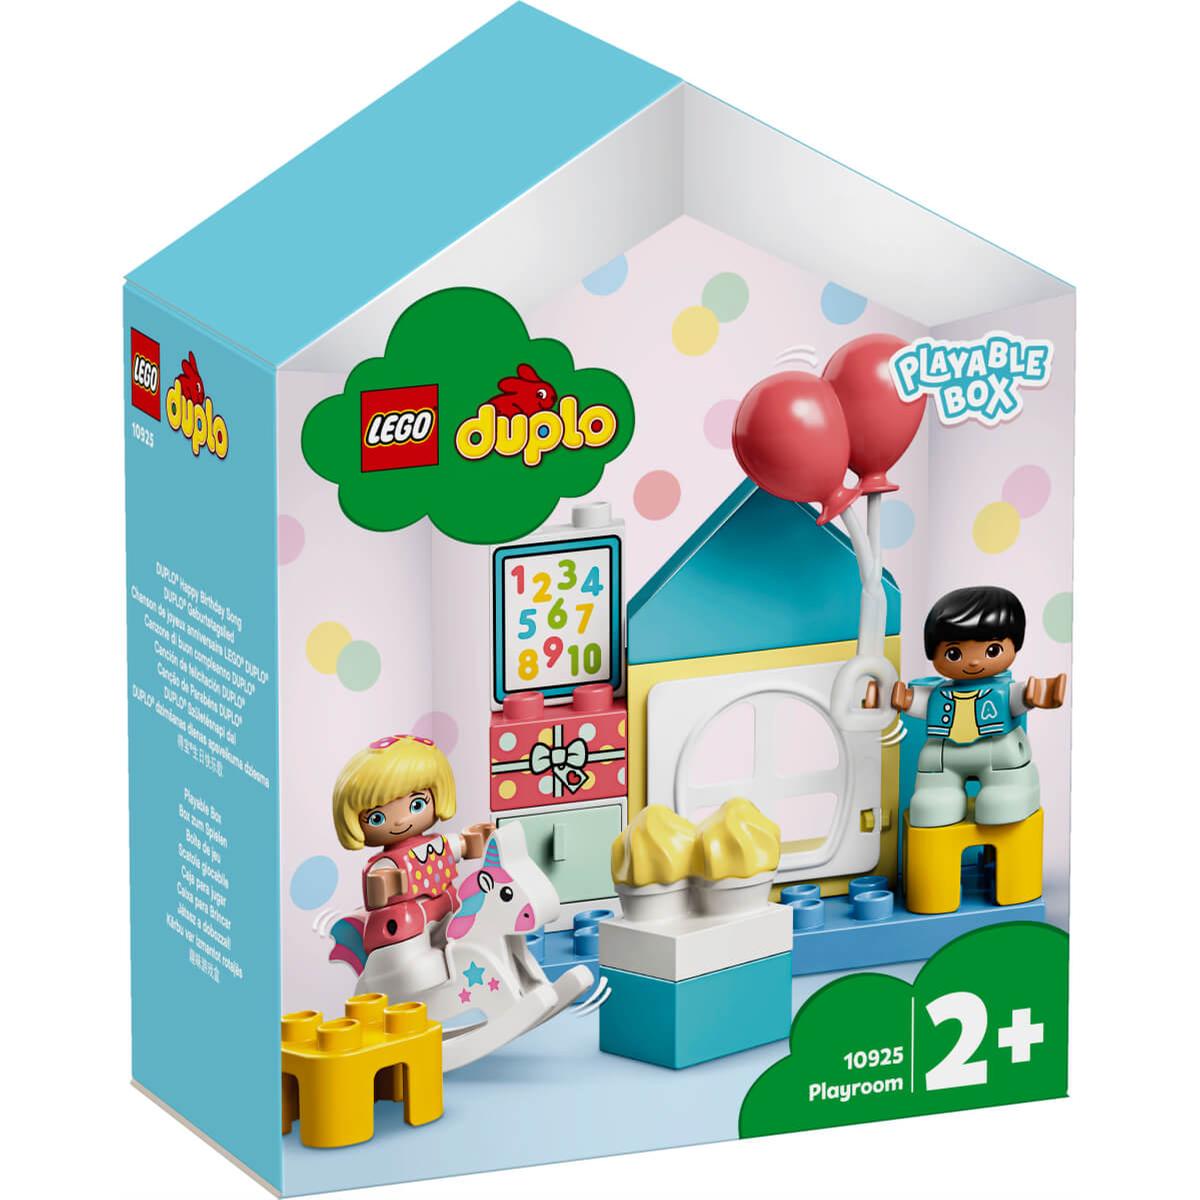 LEGO DUPLO - Quarto de Brinquedos - 10925 | Duplo vila | Loja de brinquedos  e videojogos Online Toysrus